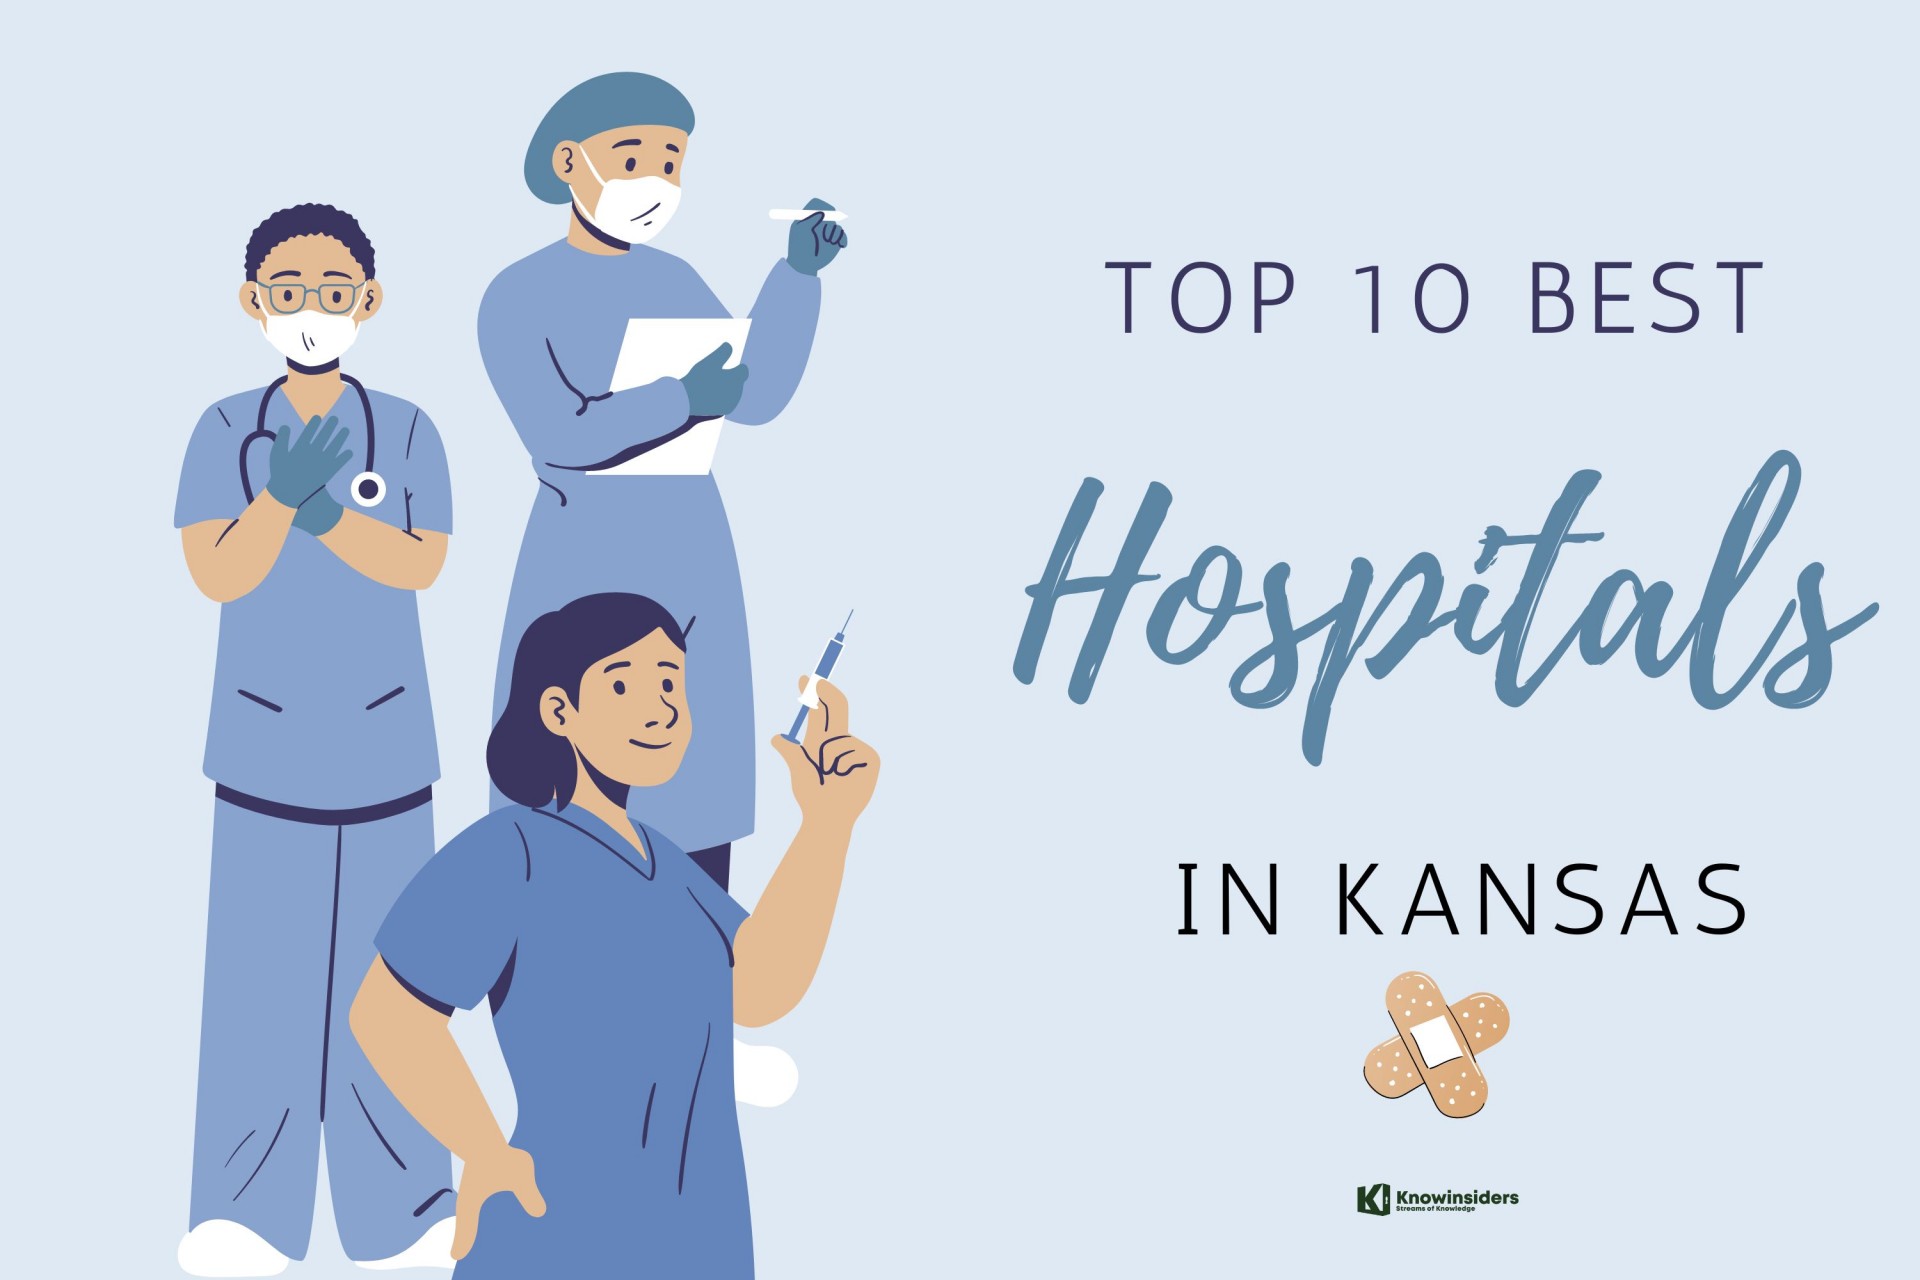 Top 10 Best Hospitals In Kansas 2024/25 Based on Healthgrades/US News/Newsweek Rankings